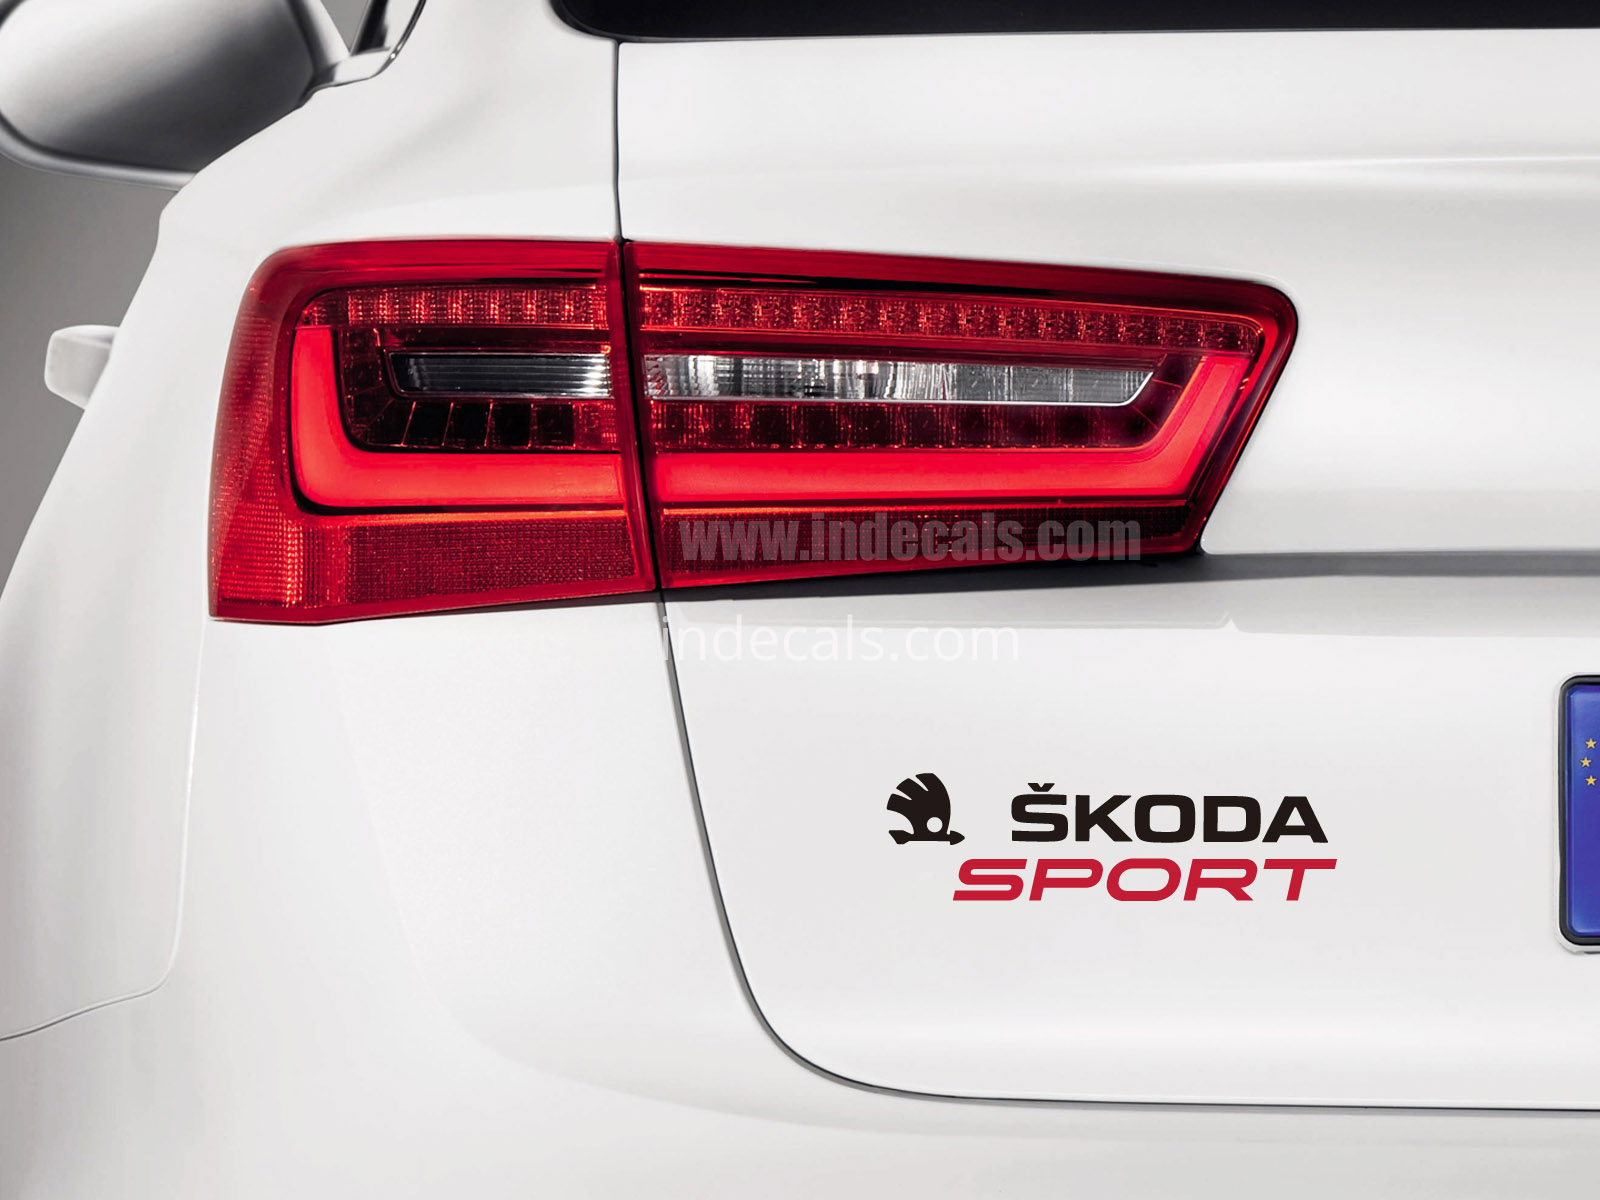 1 x Skoda Sports Sticker for Trunk - Black & Red